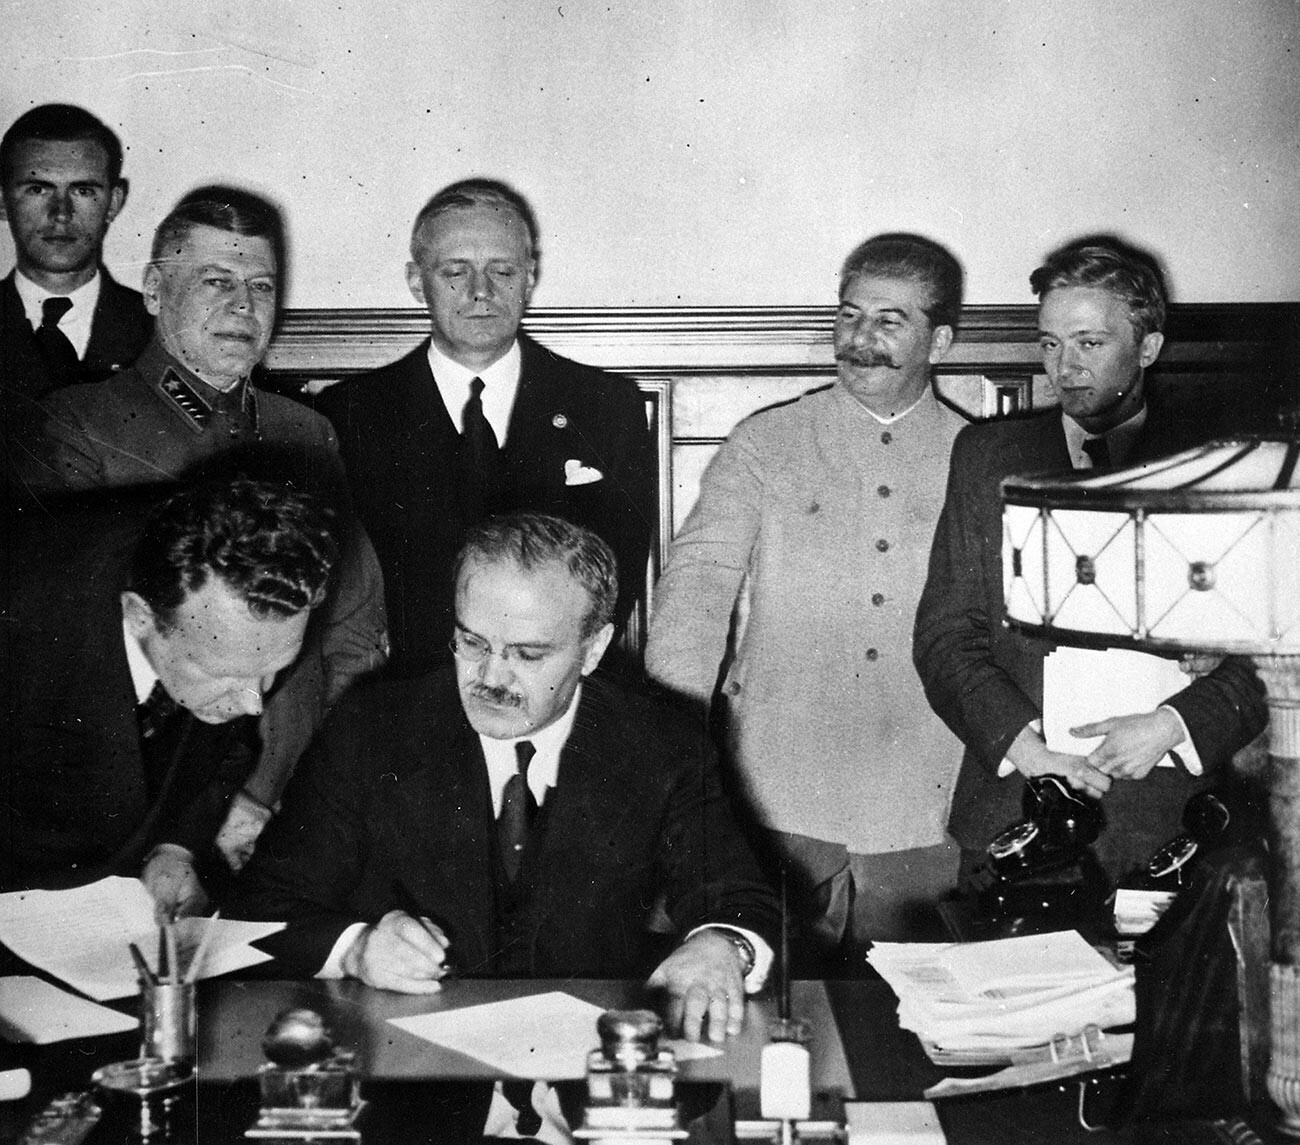 Ruski zunanji minister Vjačeslav Molotov z nemškim ministrom von Ribbentropom in Josifom Stalinom. 